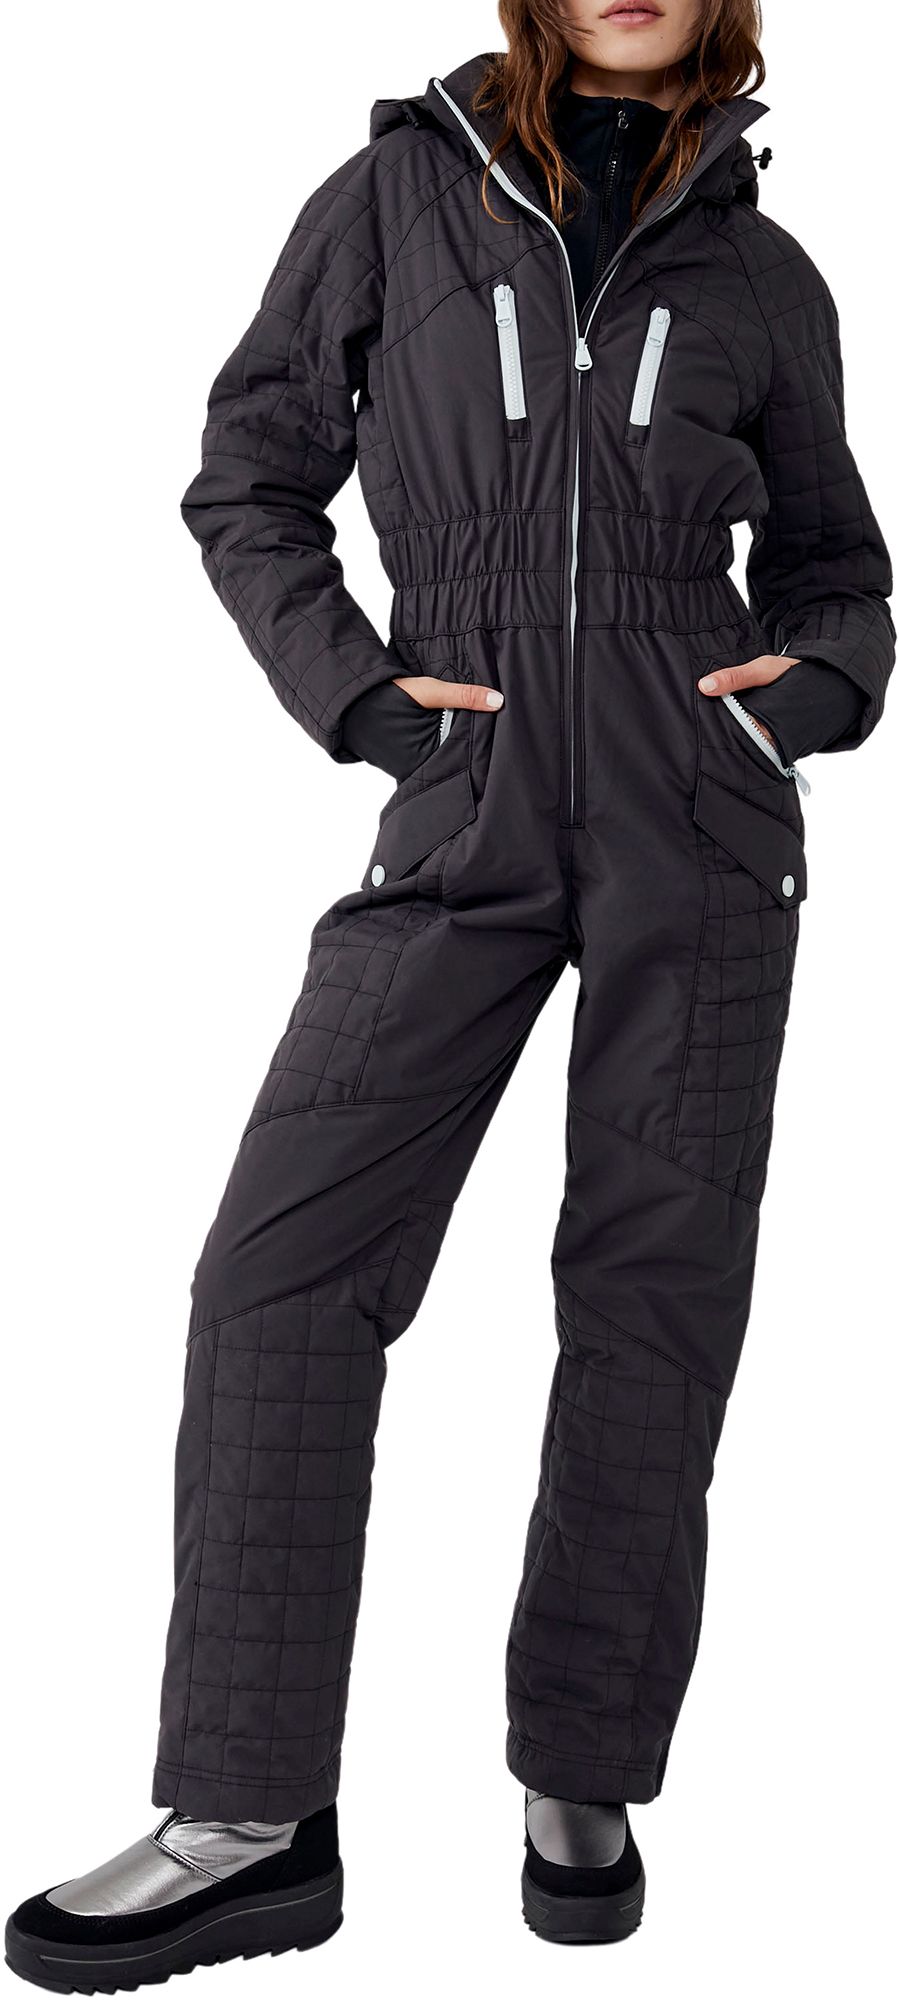 Photos - Ski Wear FP Movement Women's All Prepped Ski Suit, XL, Black 22OQIWLLPRPPDSTXXWOU